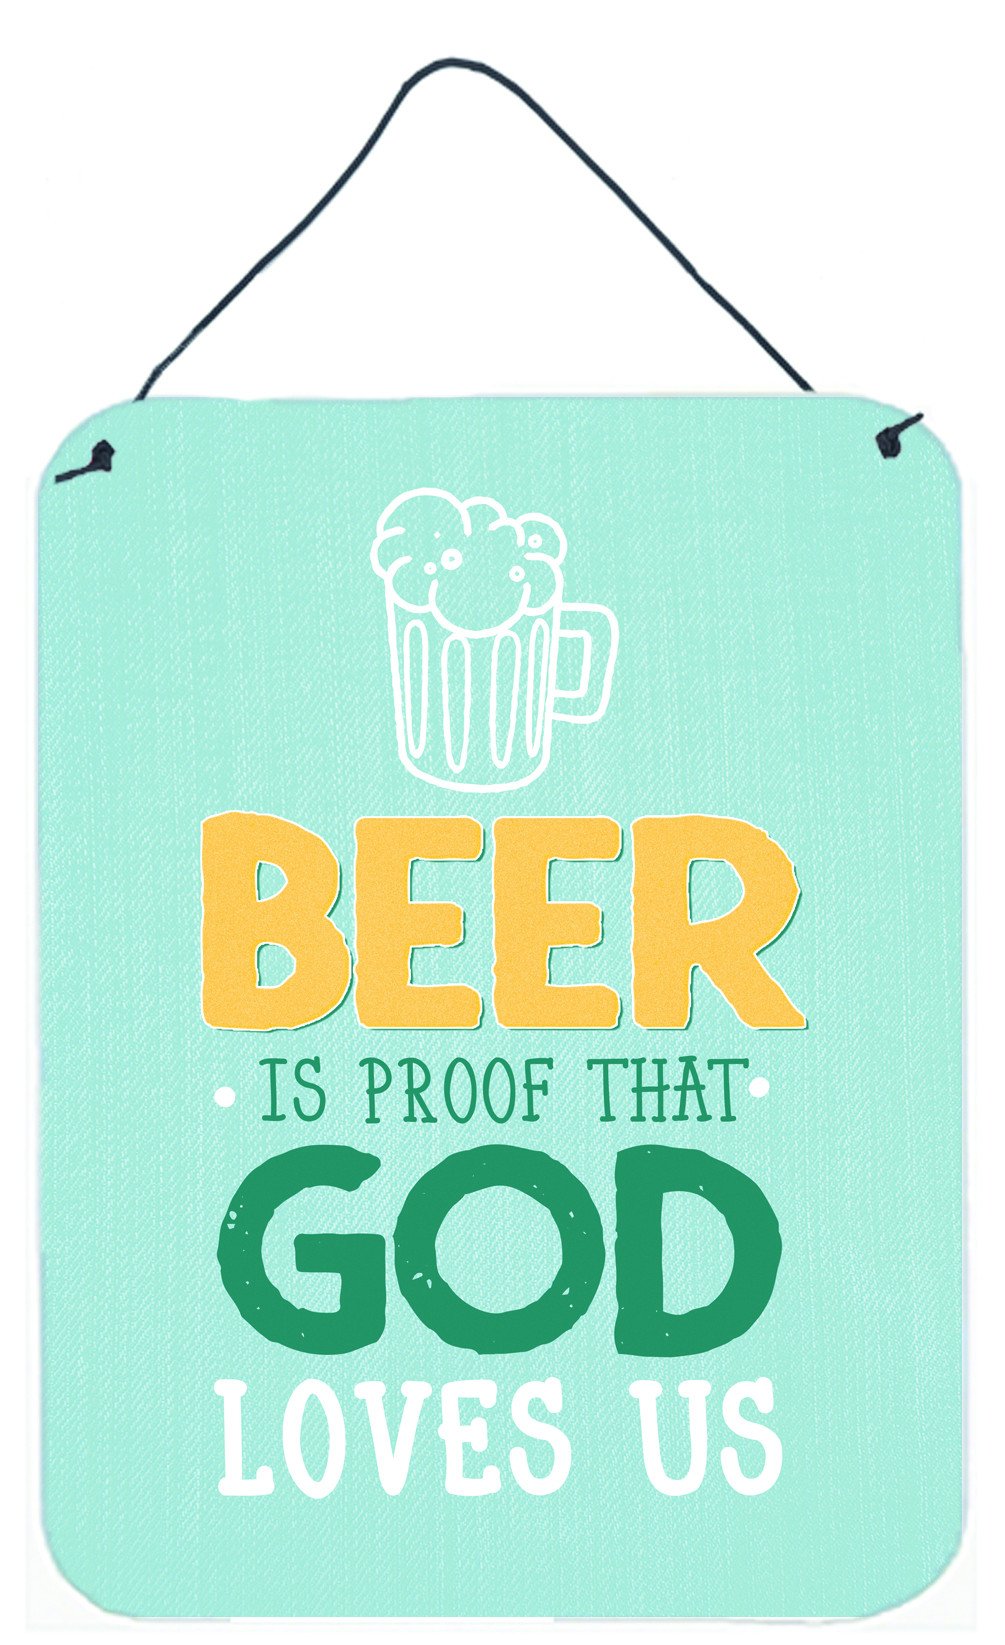 Beer is Proof God Loves You Wall or Door Hanging Prints BB5423DS1216 by Caroline's Treasures